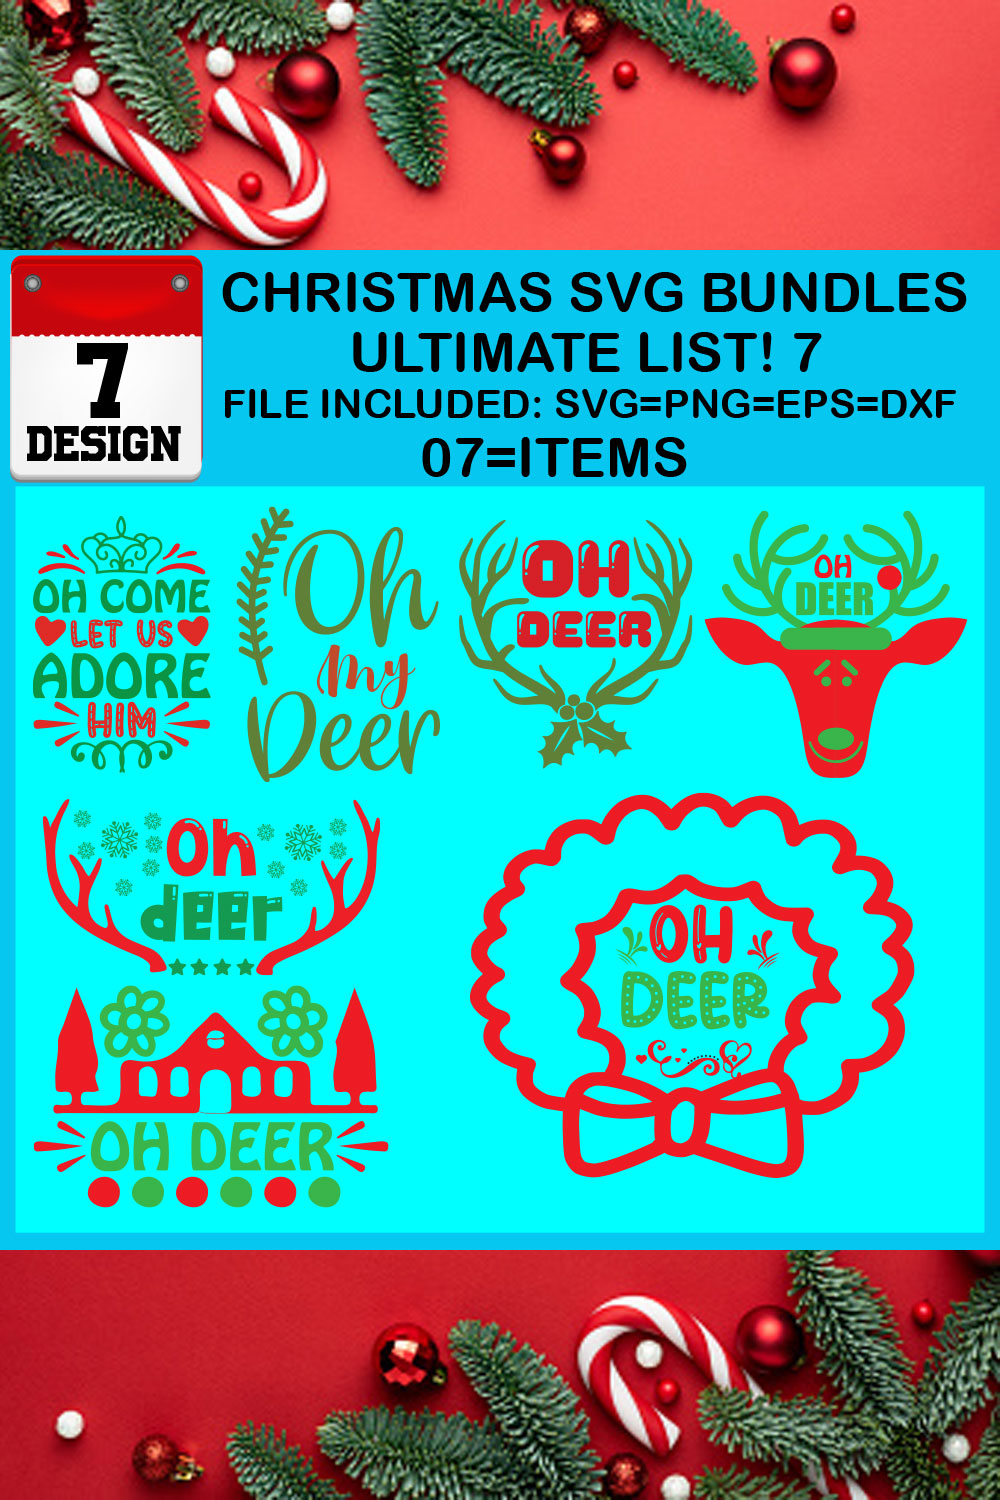 Free Ultimate List! 7 Christmas SVG Bundles pinterest preview image.